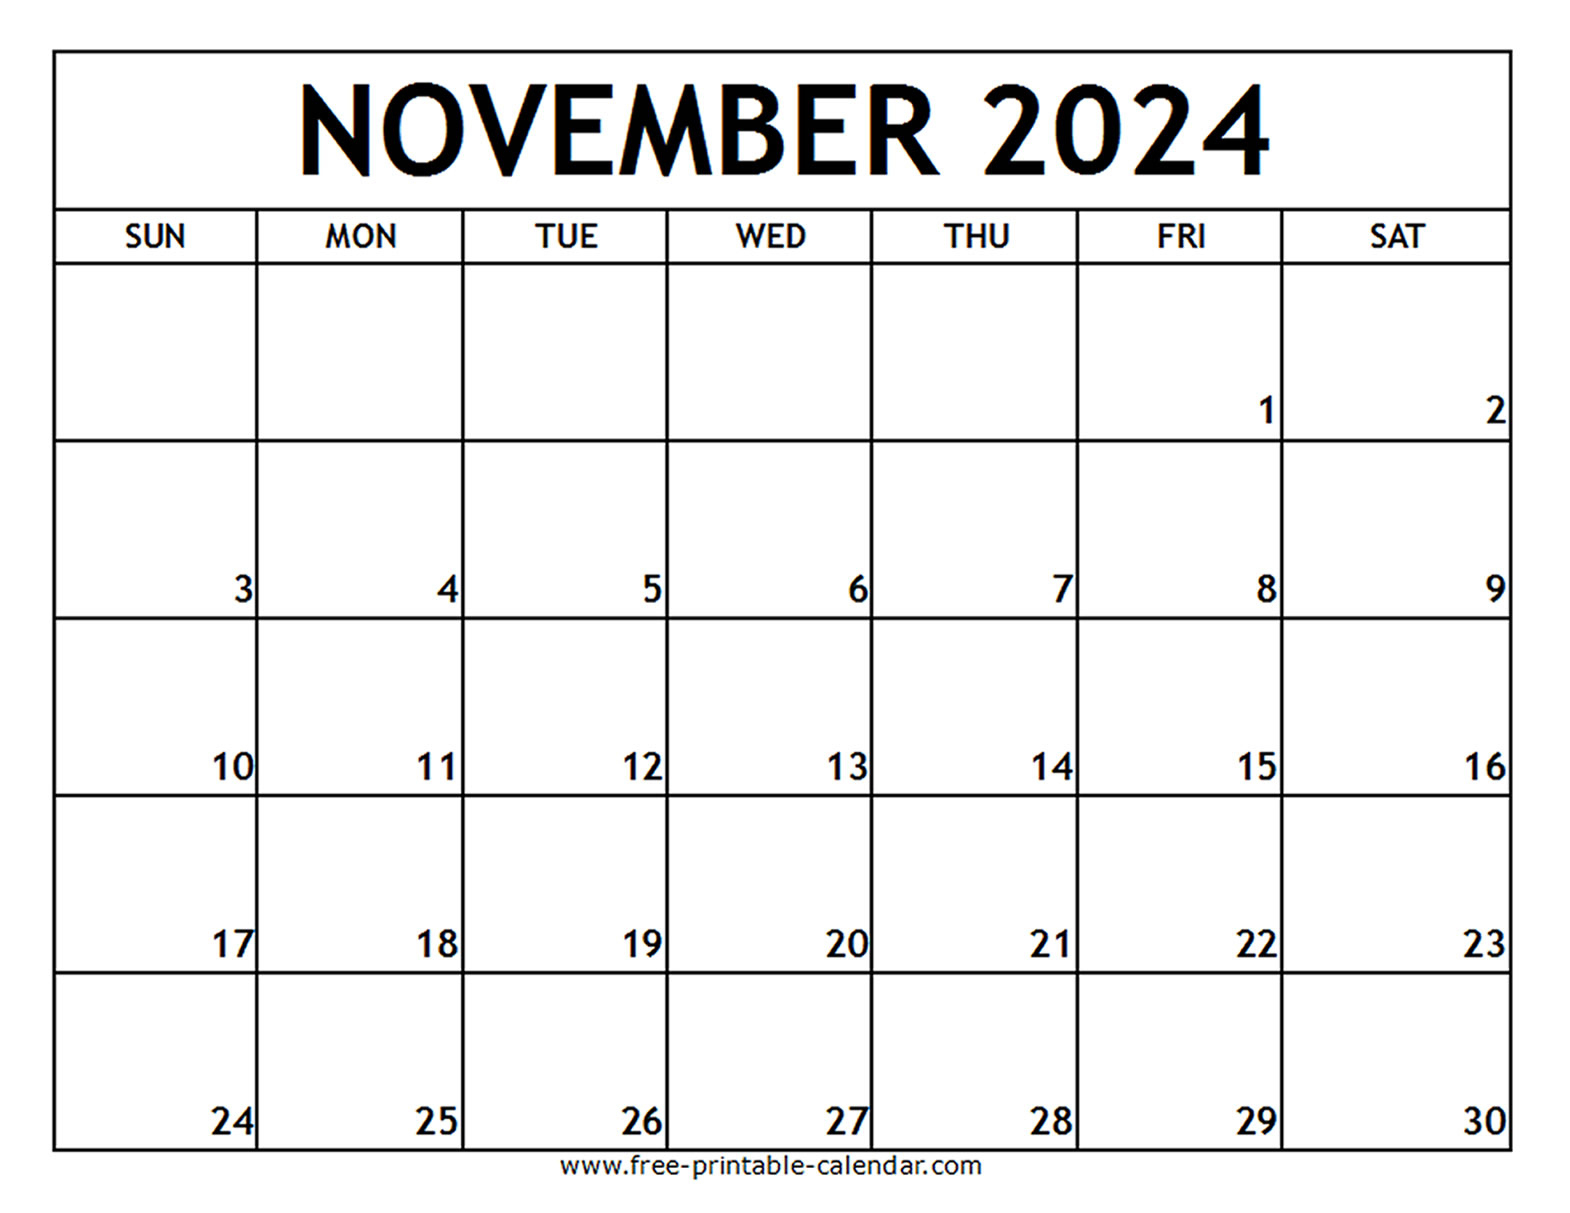 November 2024 Printable Calendar - Free-Printable-Calendar | Nov 2024 Calendar Printable